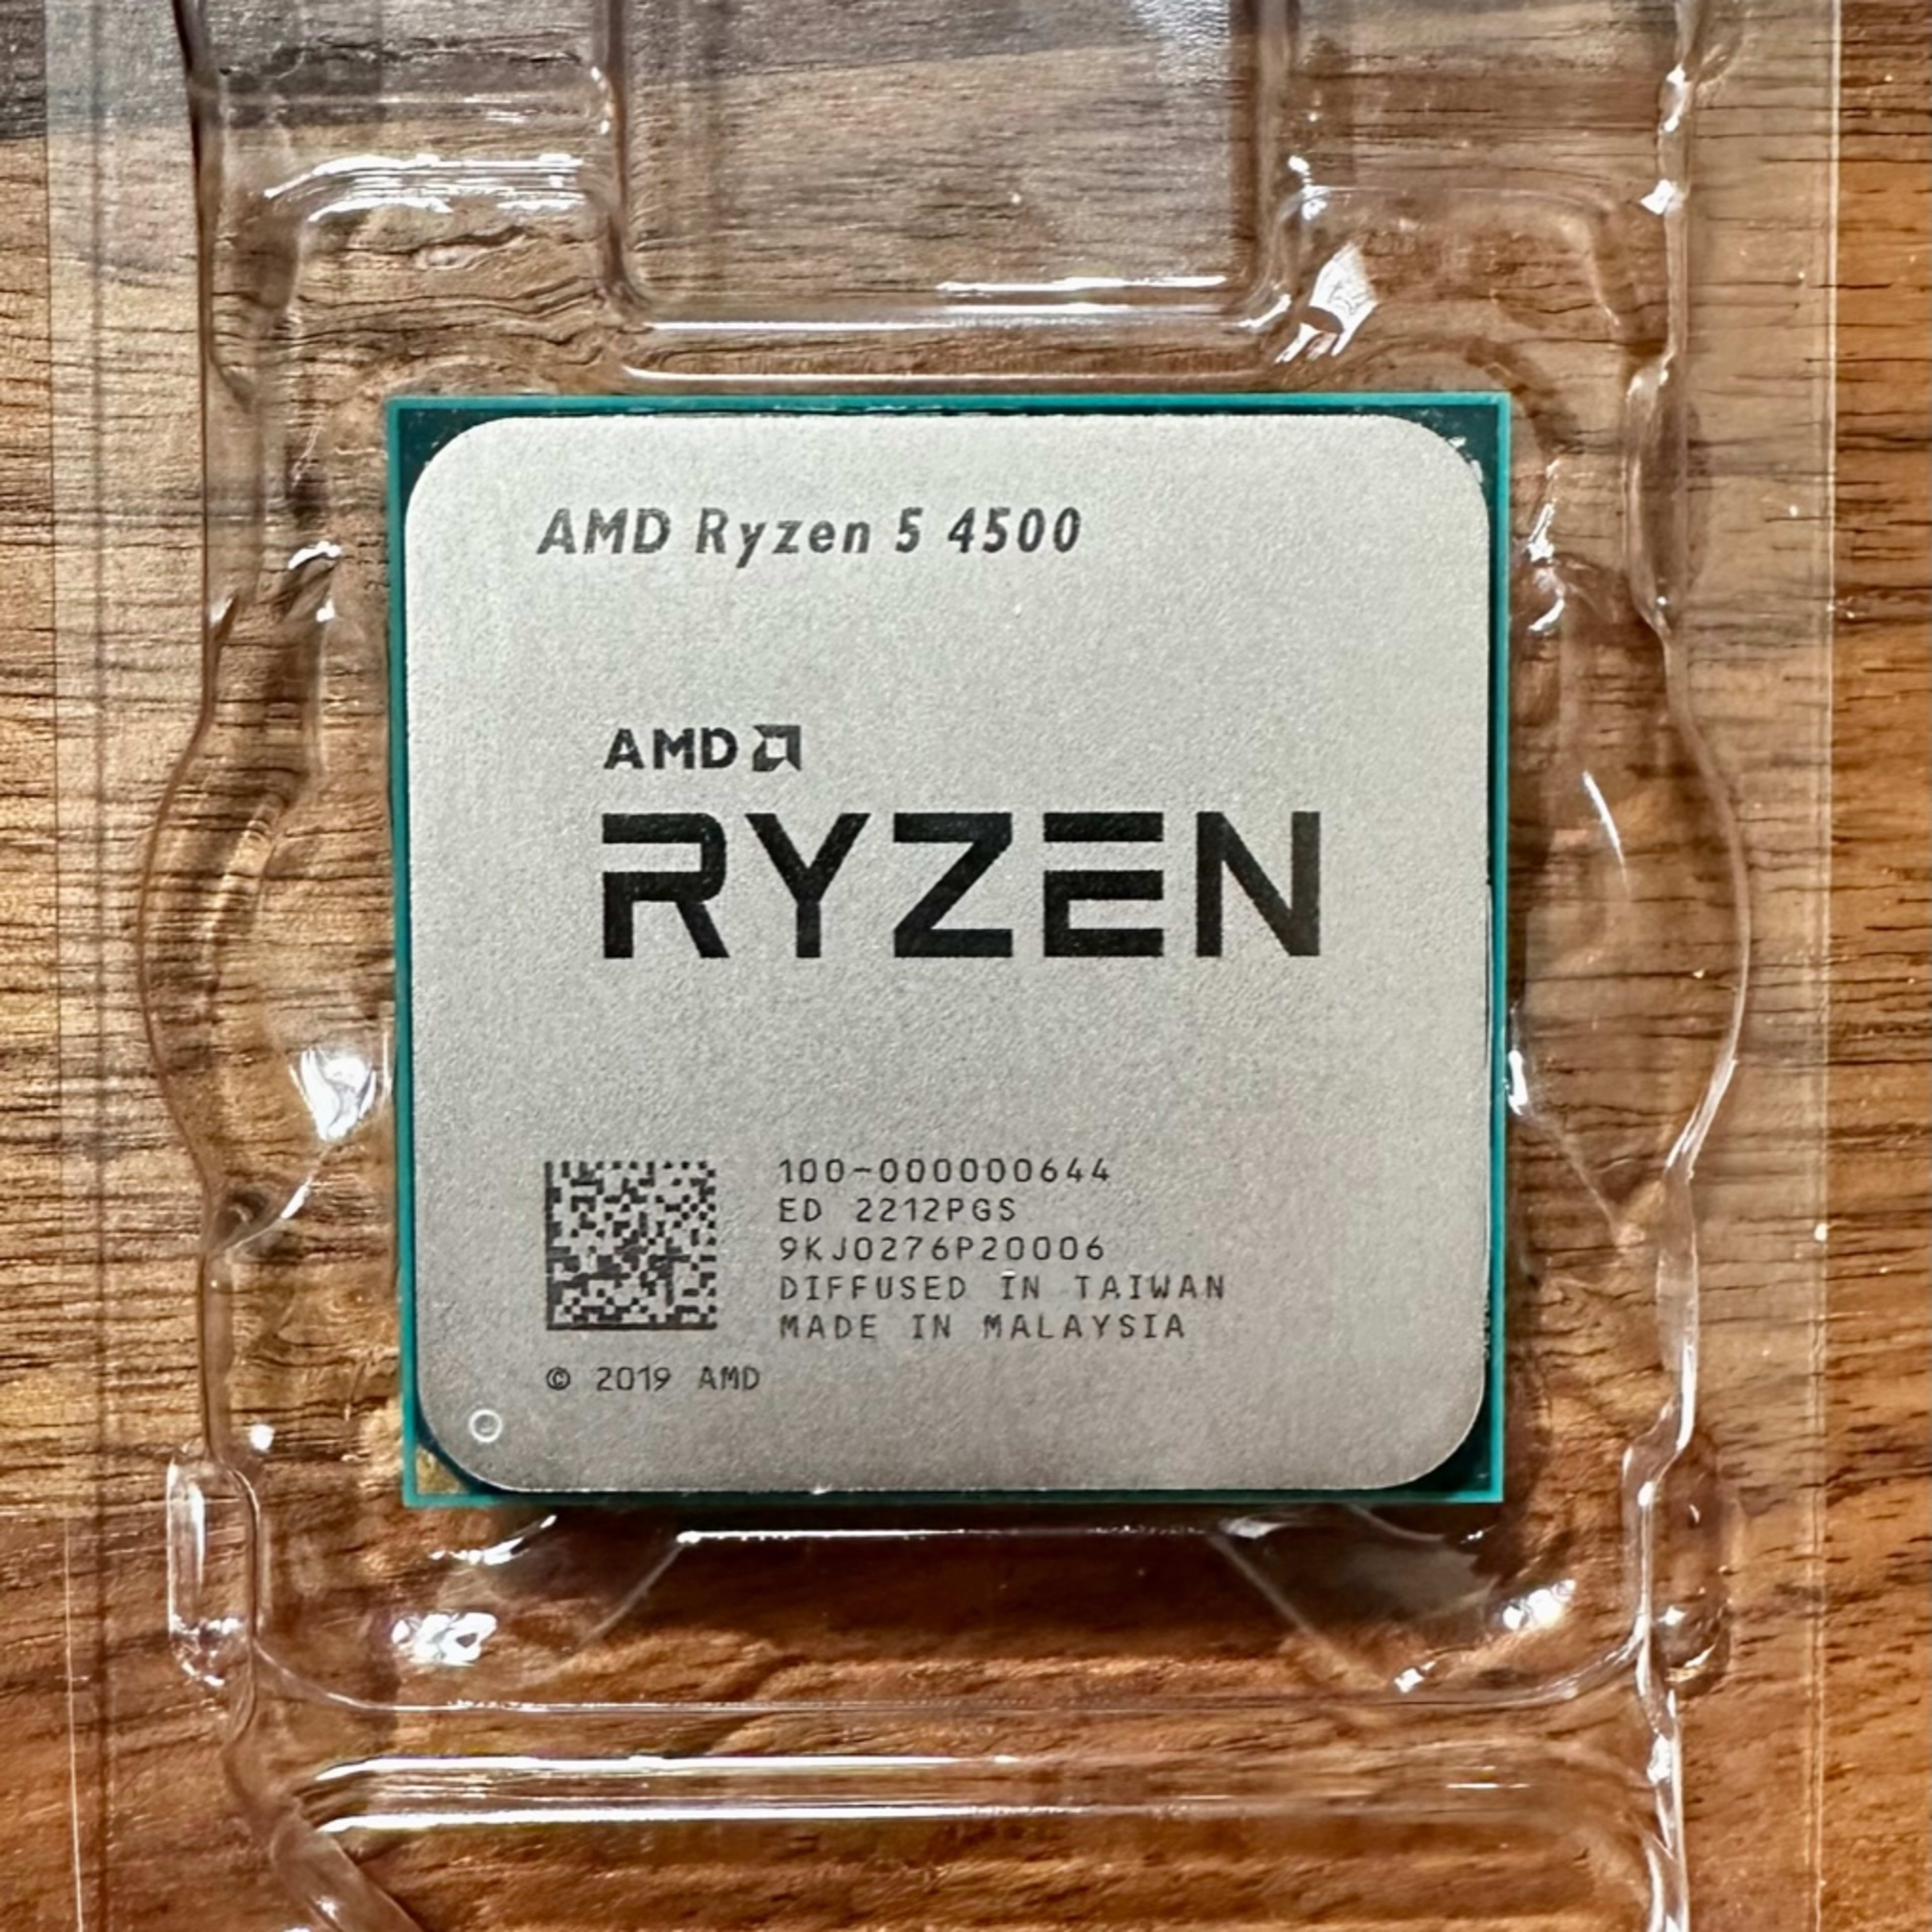 AMD Ryzen 5 4500 R5 4500 3.6 GHz 6-Core 12-الموضوع معالج وحدة المعالجة  المركزية 7NM L3 = 8M 100-000000644 المقبس AM4 جديد مختومة مع مروحة تبريد -  AliExpress